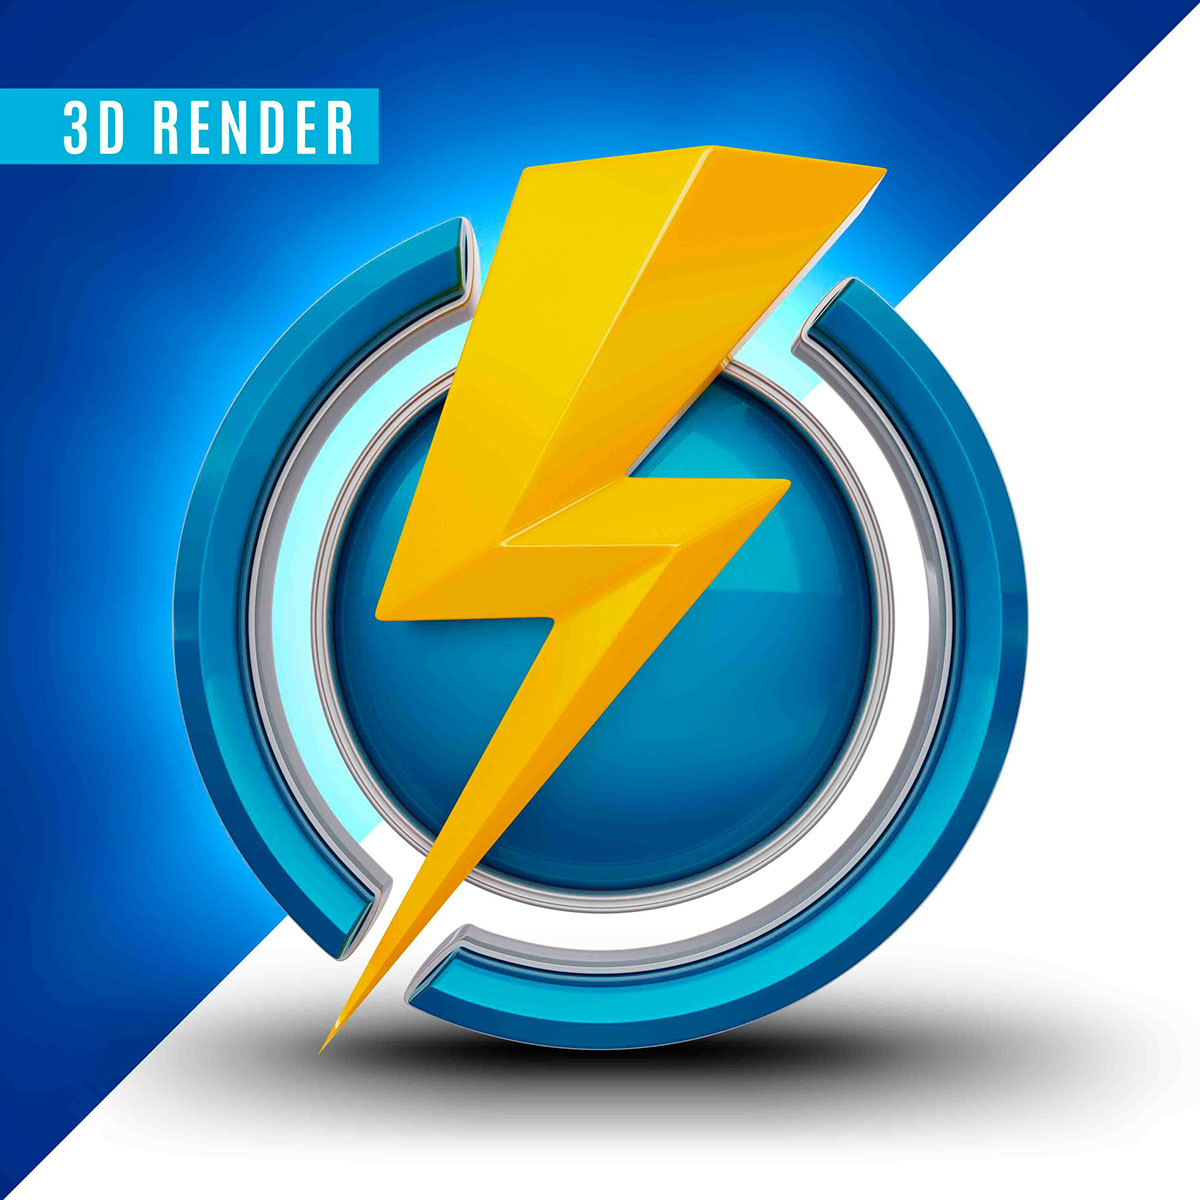 3d thunder Logo rendition image